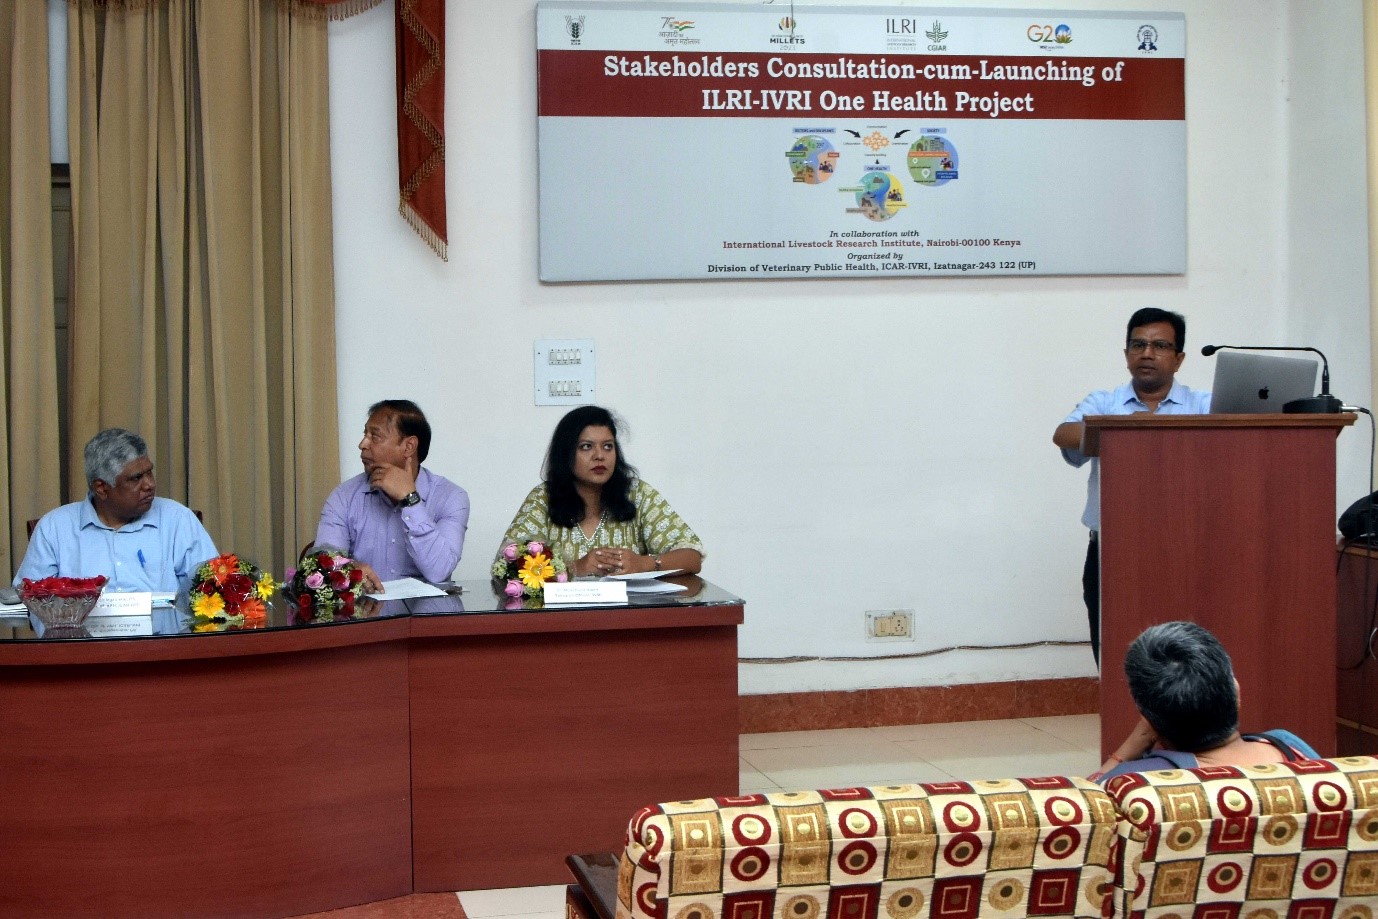 Ram Pratim Deka (scientist, ILRI) addressing the participants at the launch of the CGIAR One Health Initiative in India (photo credit: ILRI/Ram Pratim Deka).